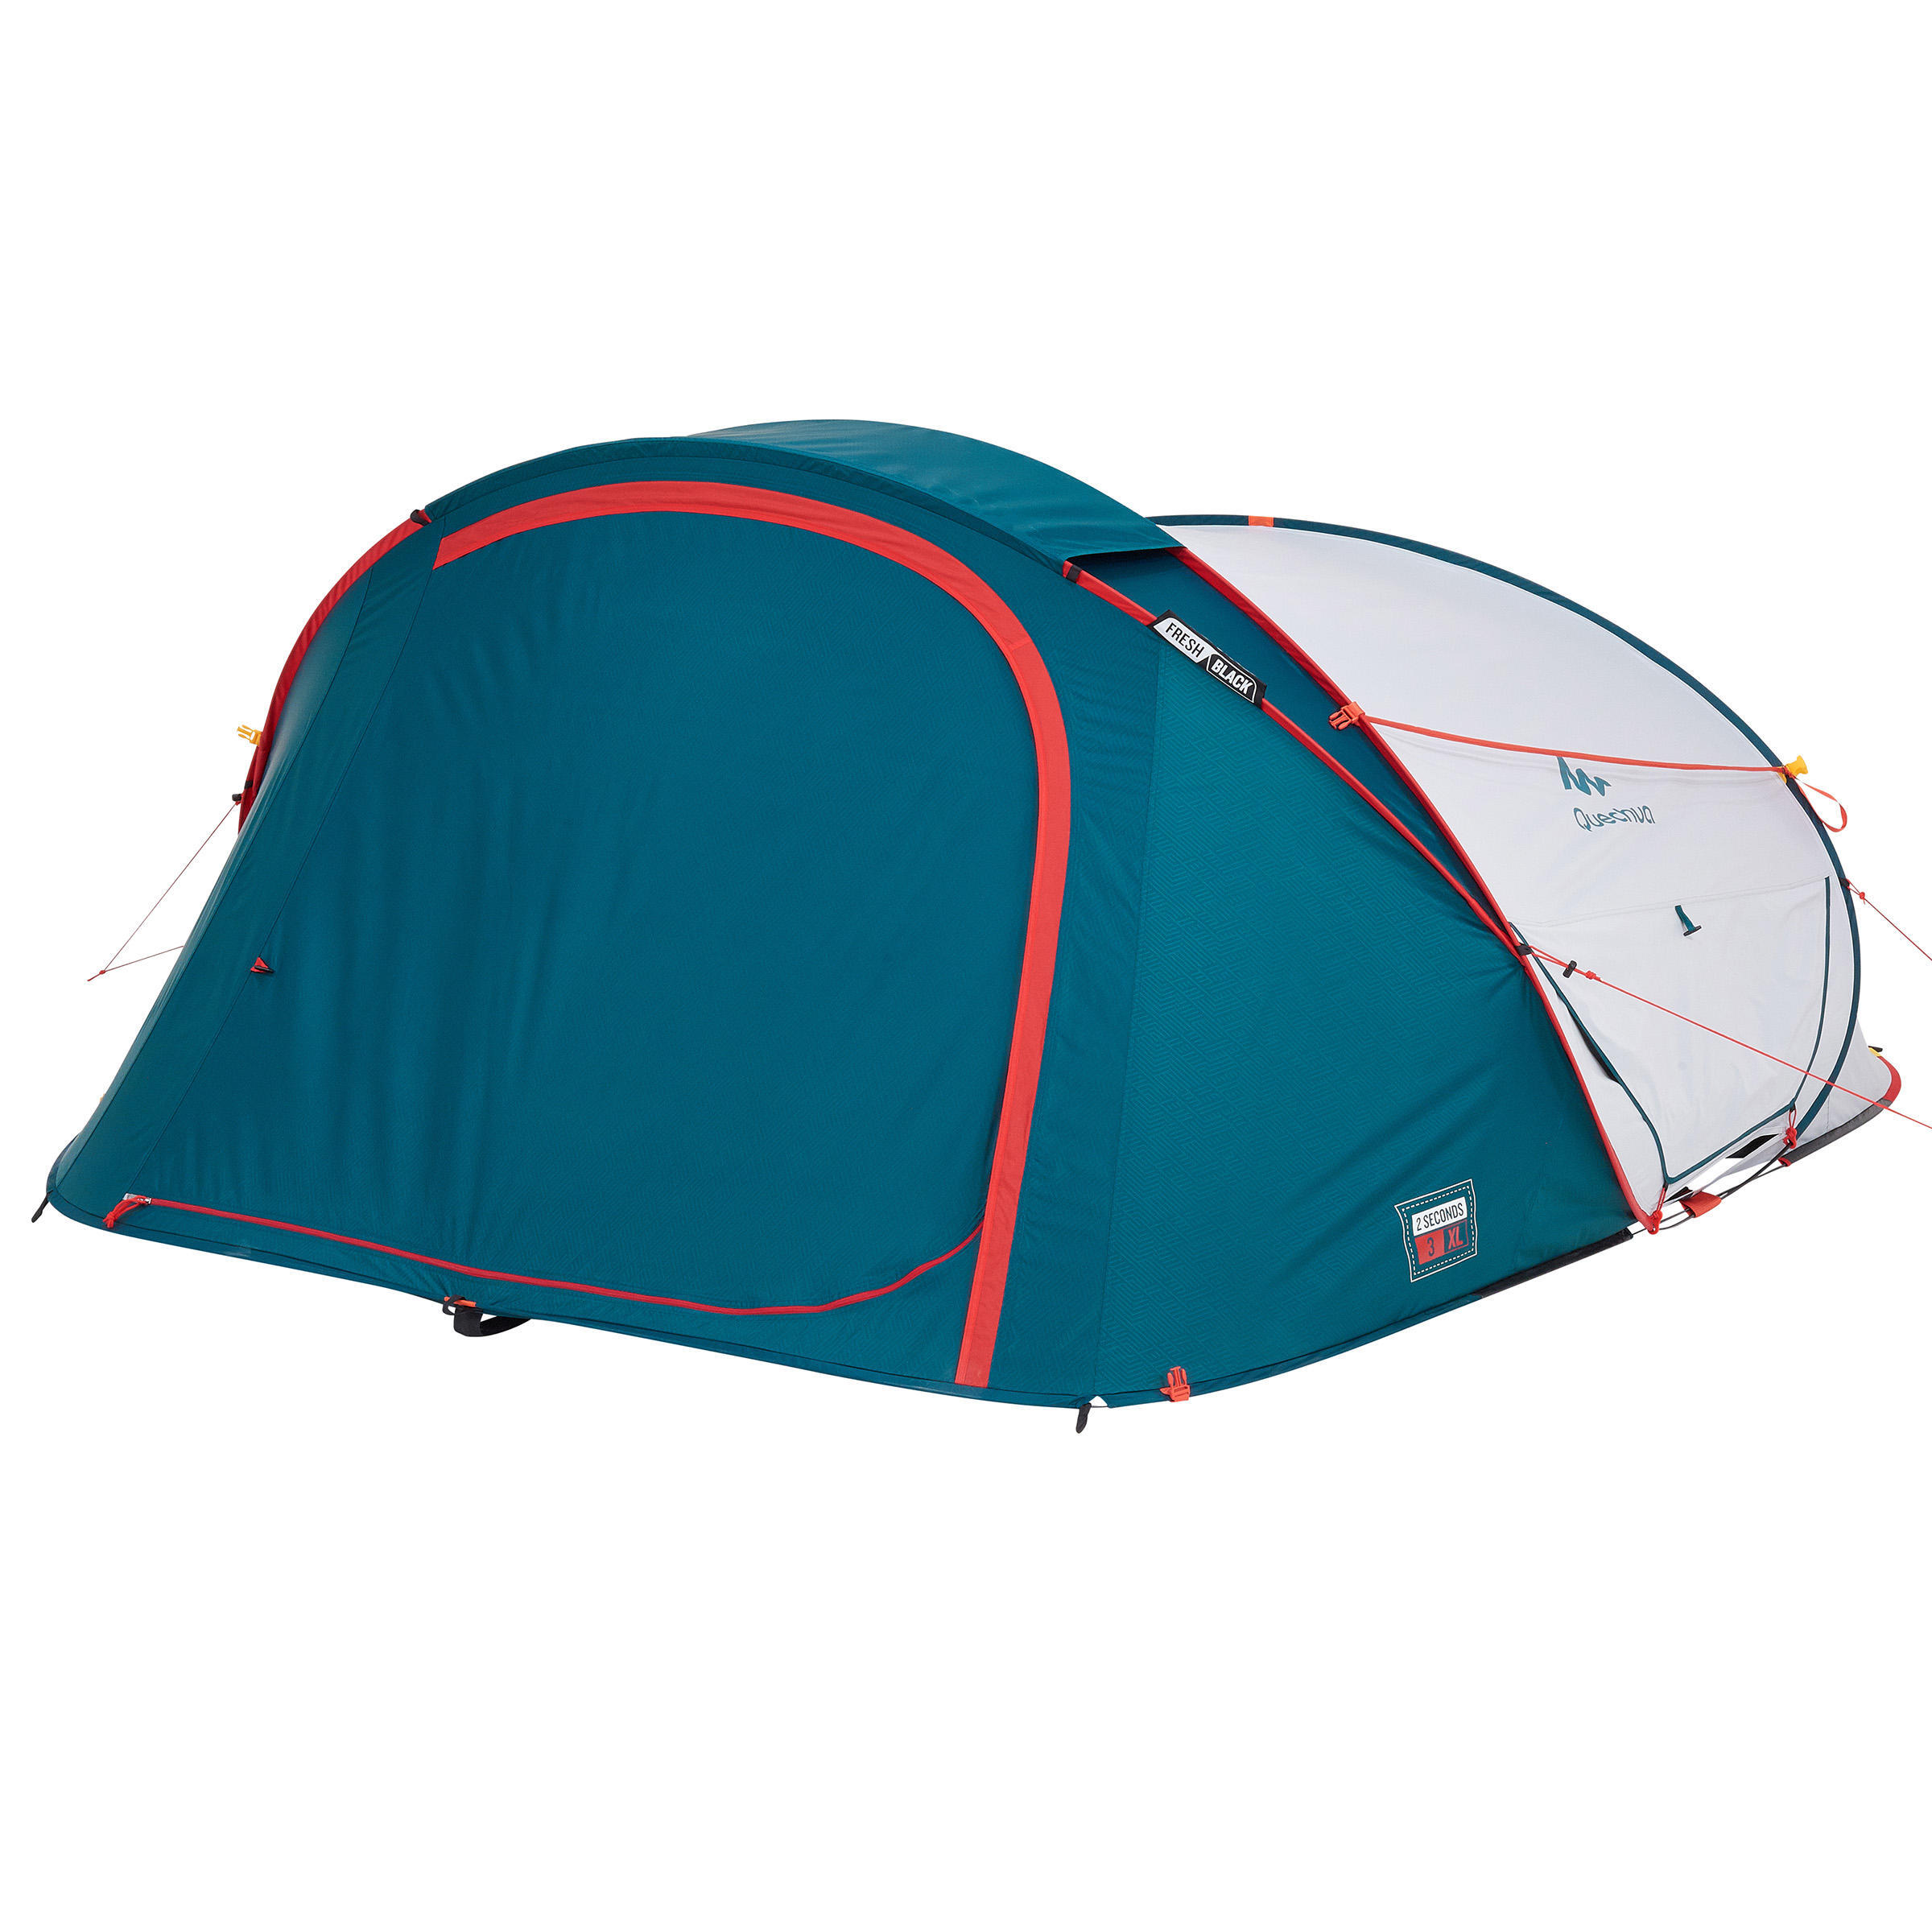 Camping tent - 2 SECONDS XL - 3-person - Fresh & Black 2/16